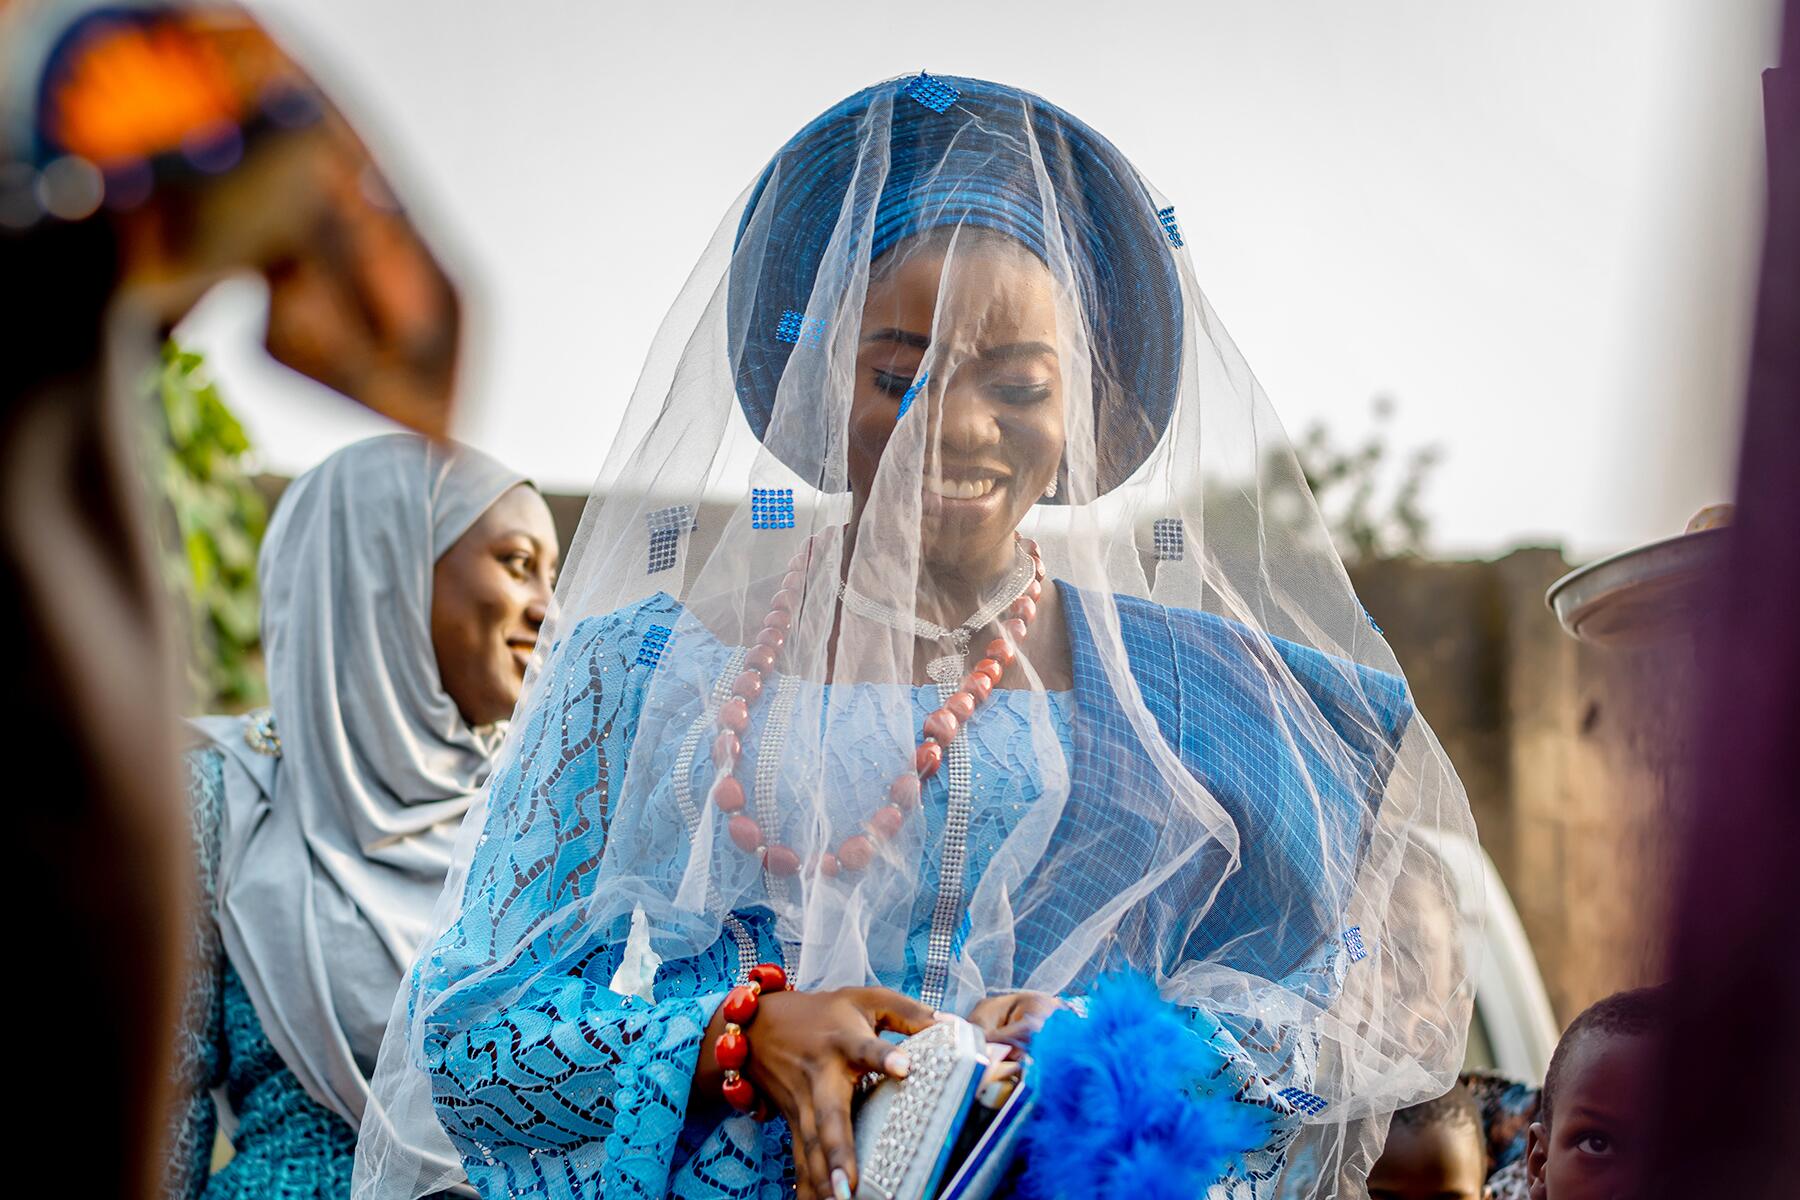 nigerian wedding dress